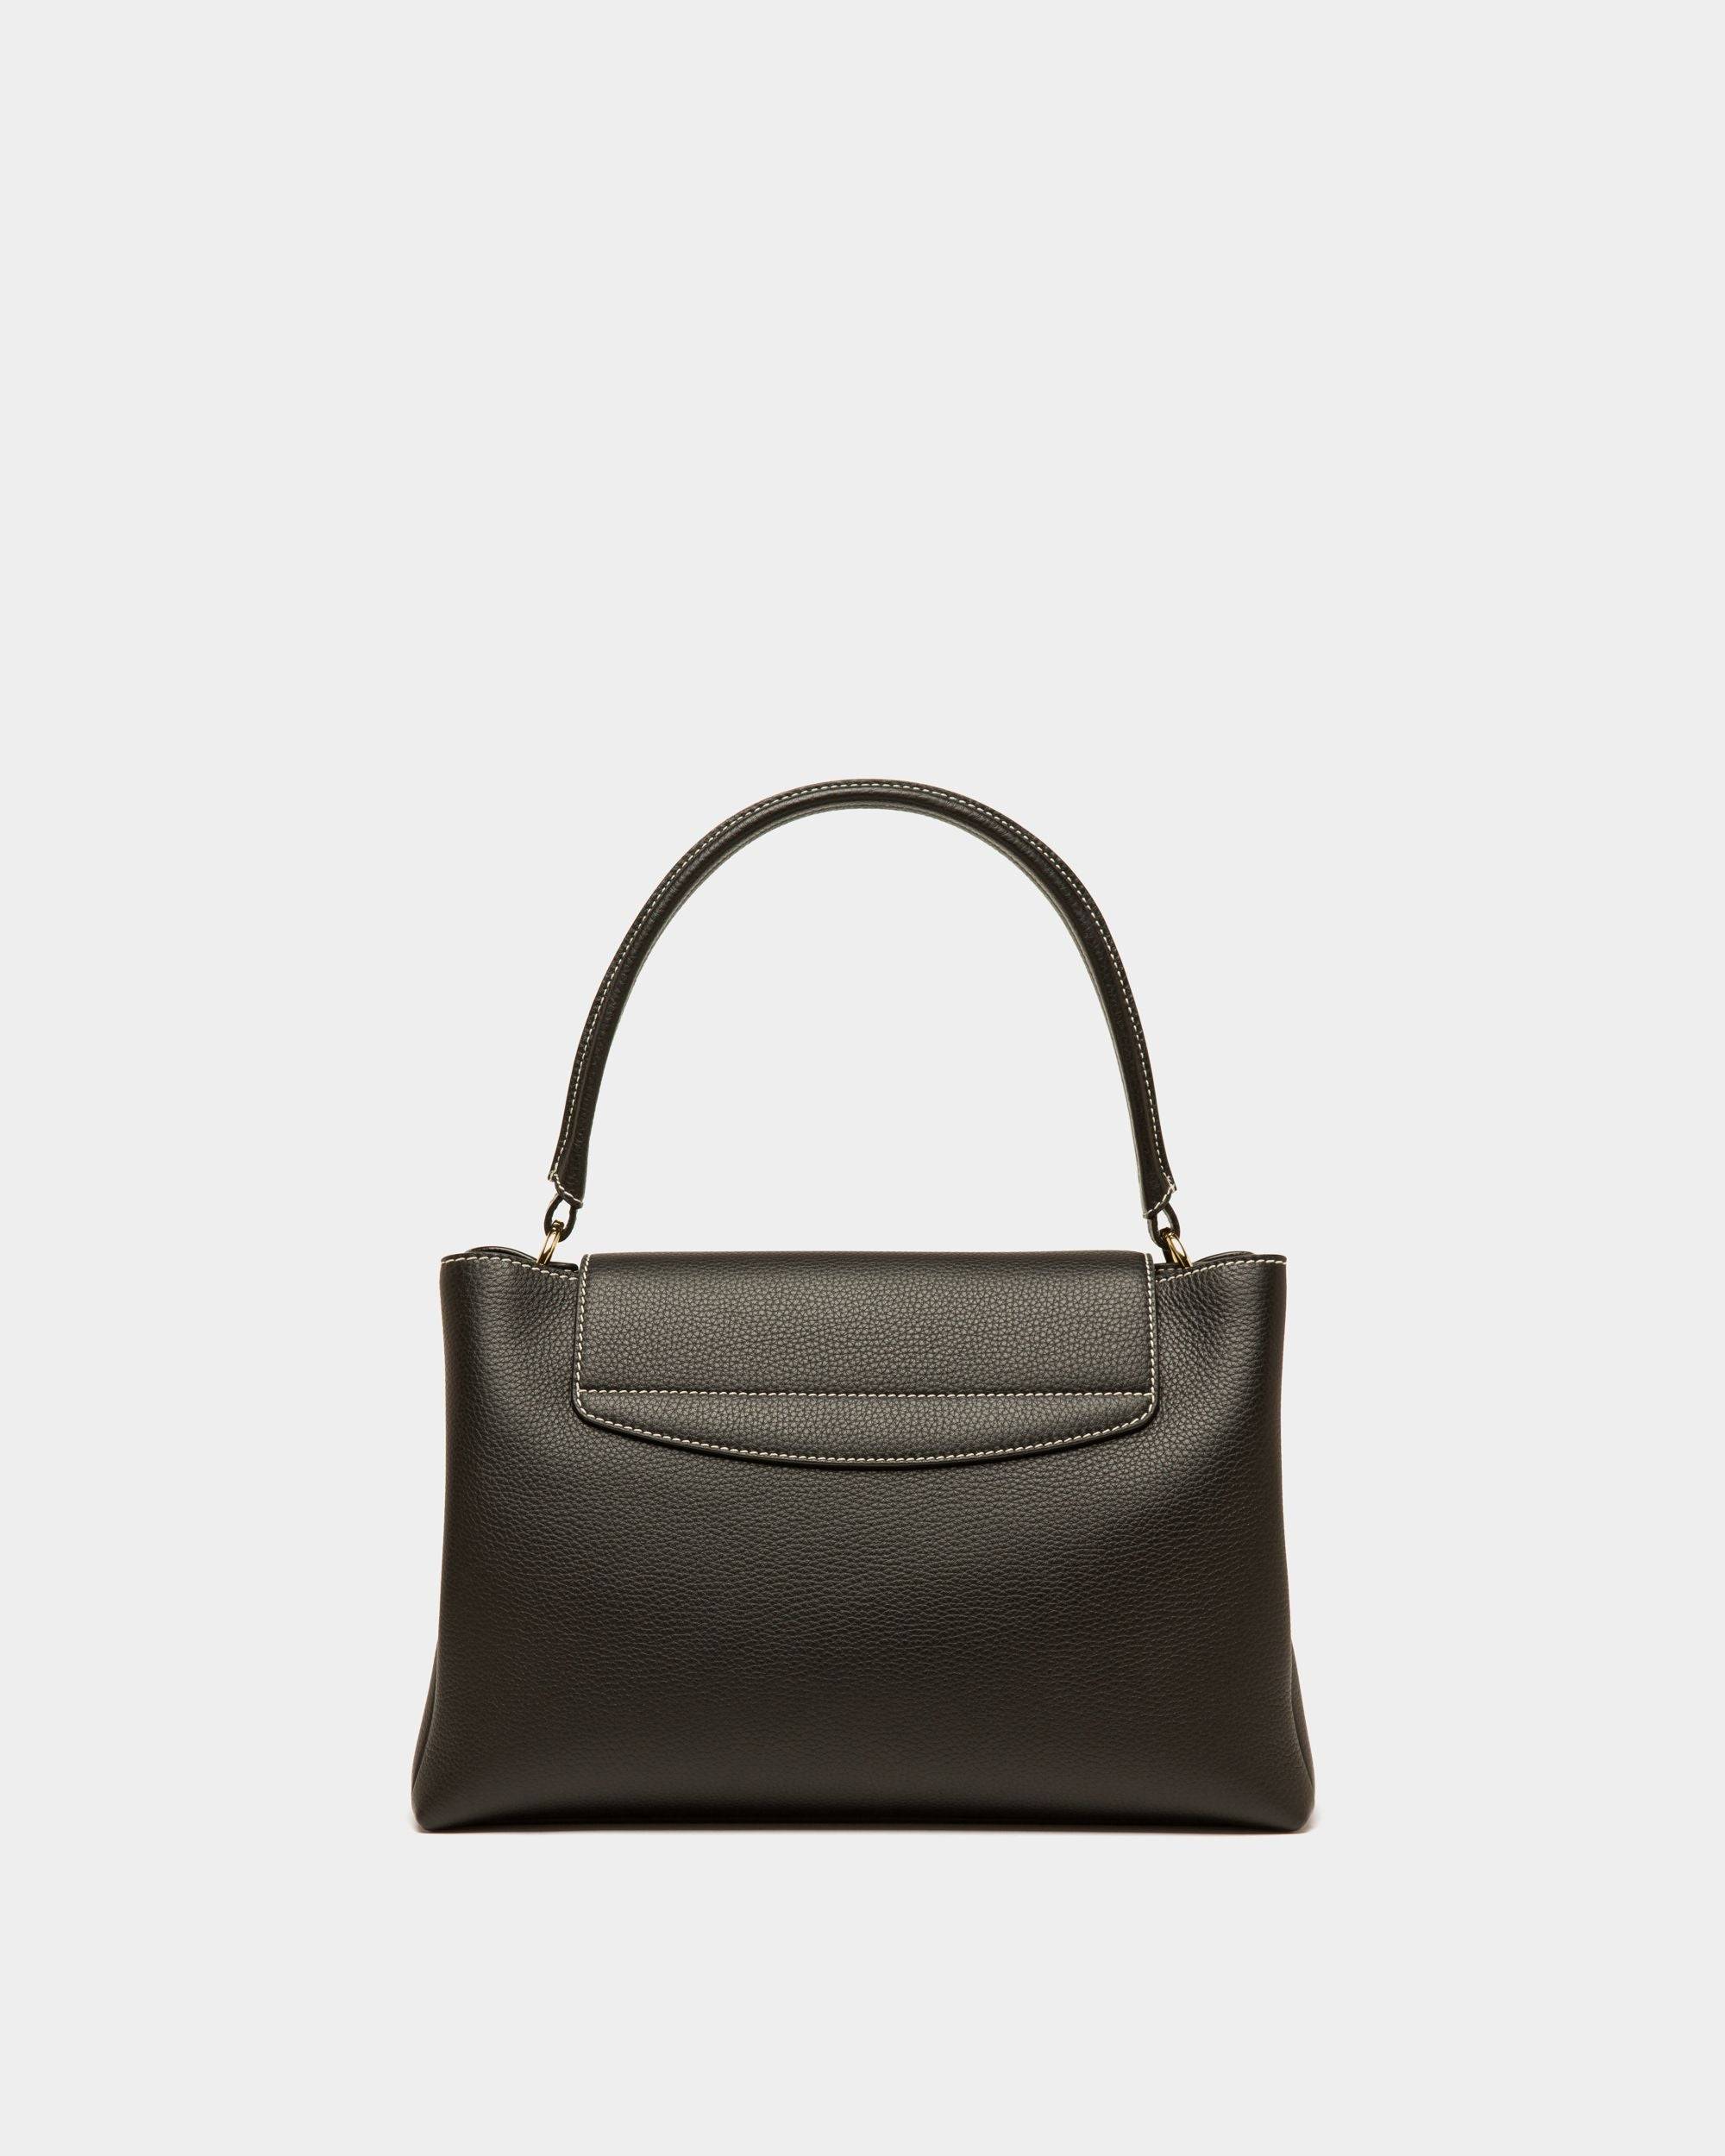 Layka | Women's Top Handle Bag | Black Leather | Bally | Still Life Back